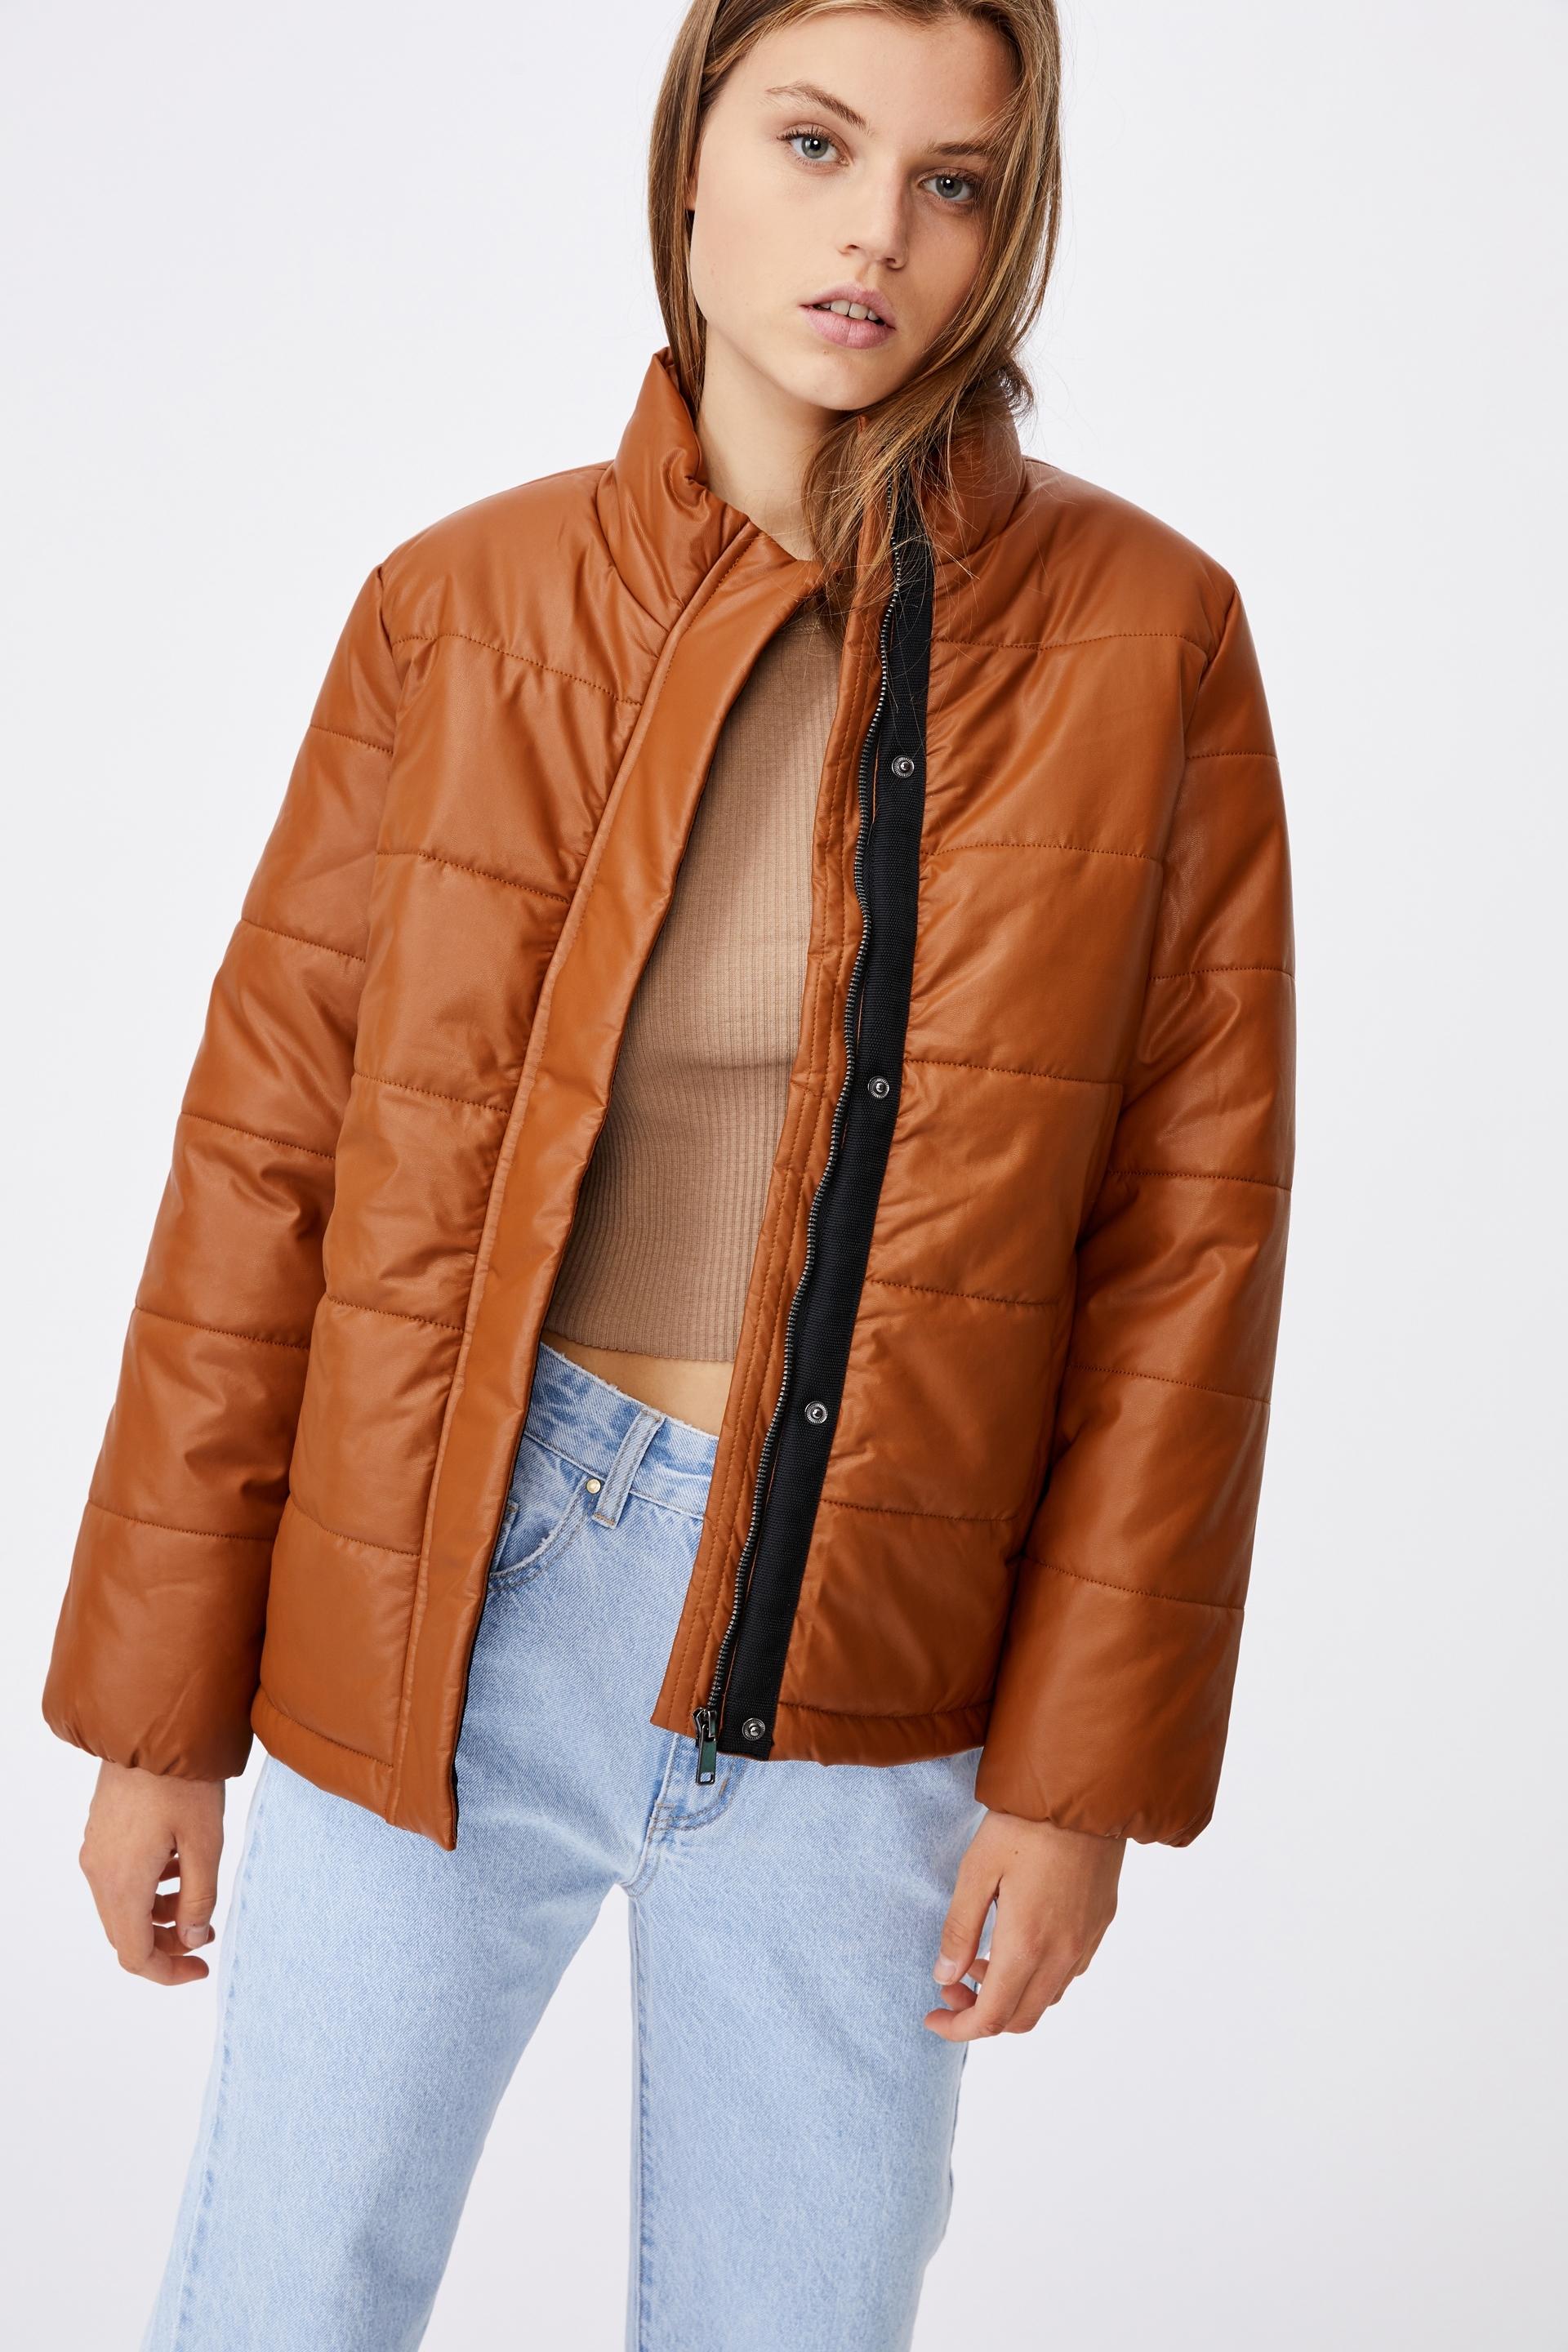 Vegan leather puffer jacket - tan Cotton On Jackets | Superbalist.com